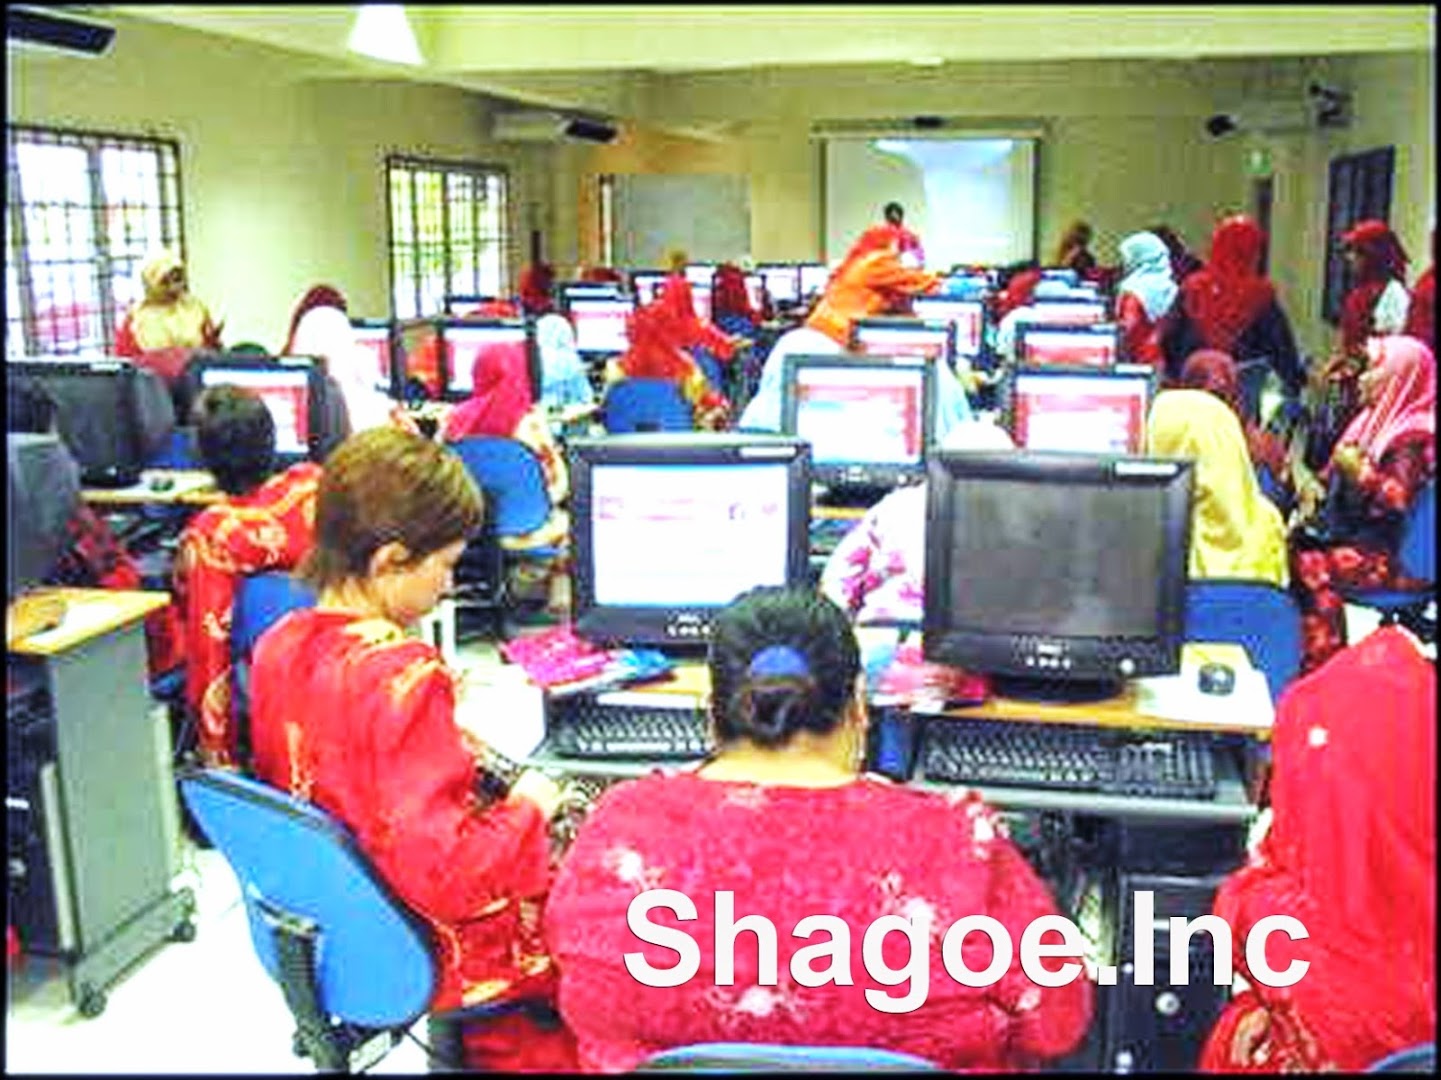 Shagoe.inc Photo